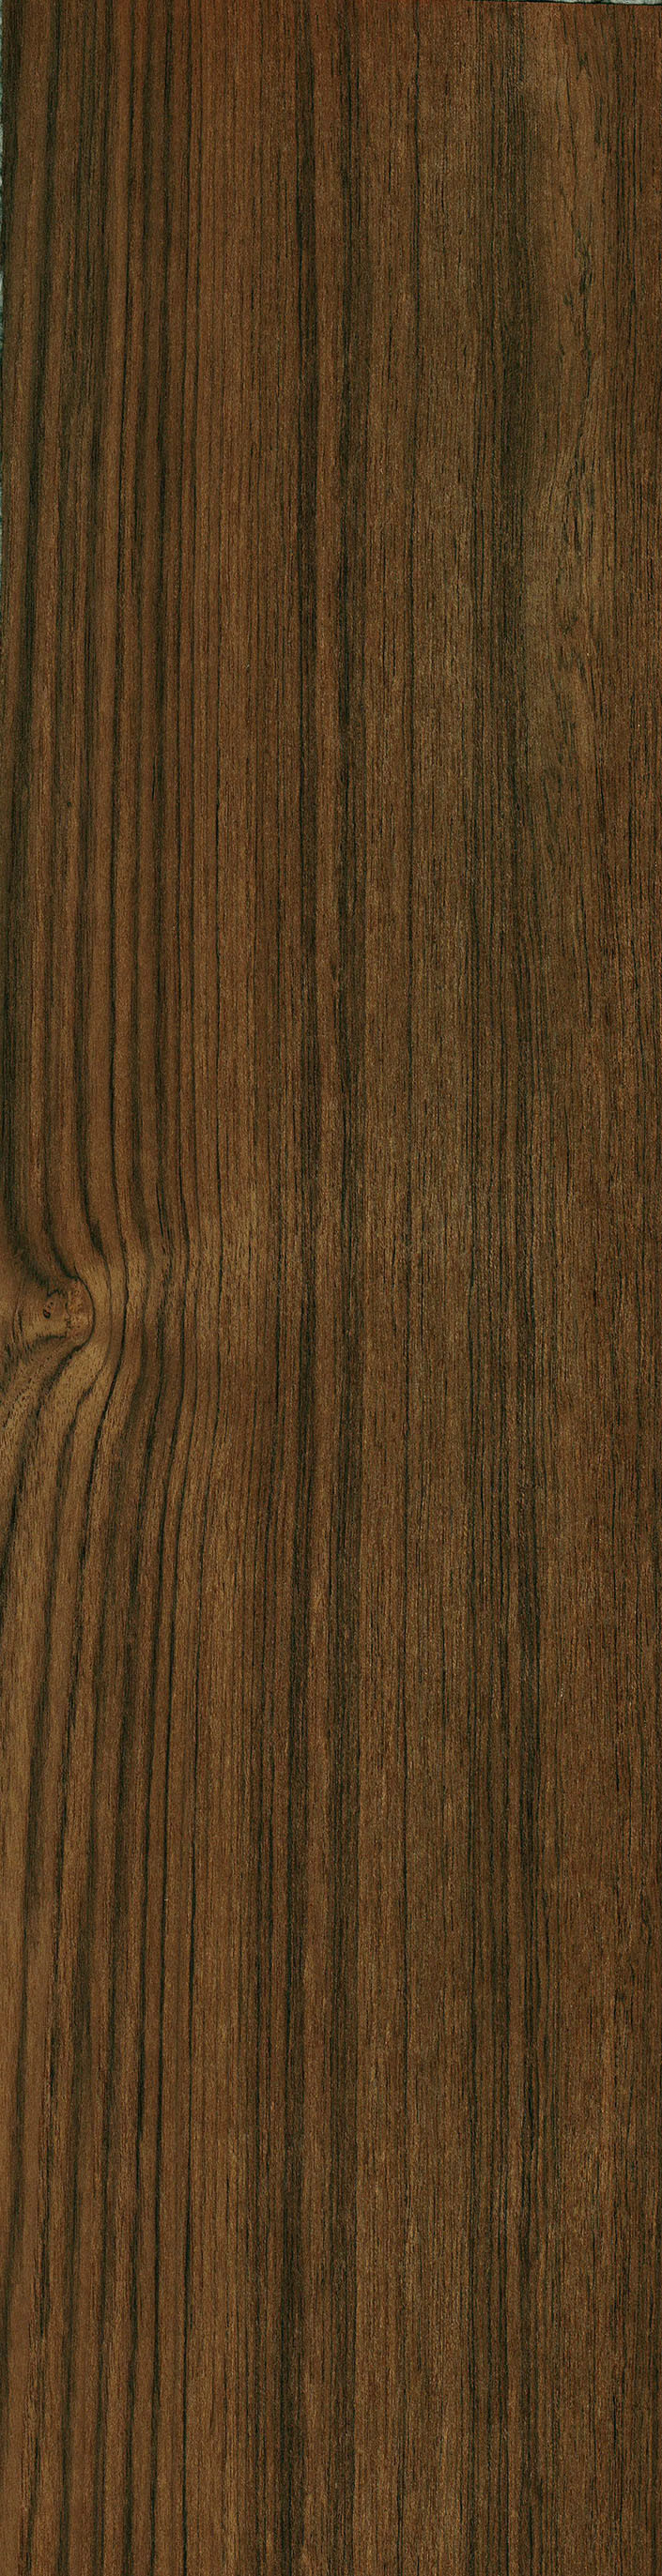 Weight Of Hardwood Flooring Per Square Foot Of Teak the Wood Database Lumber Identification Hardwood Regarding Teak Full